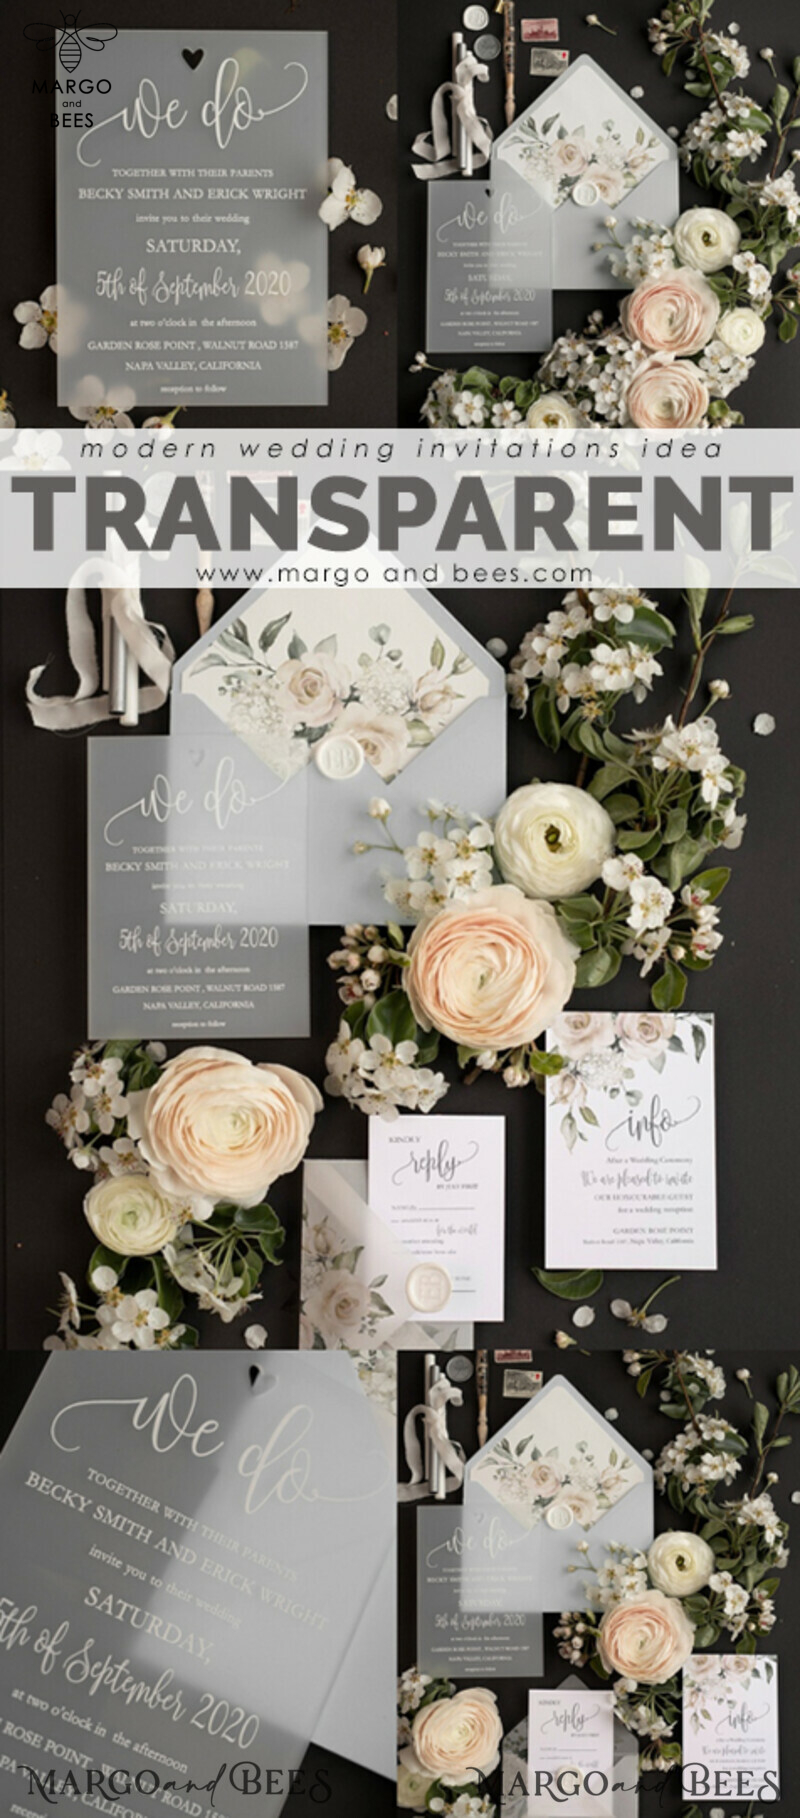 Luxury Frozen Acrylic Plexi Wedding Invitations: Engraved Heart, Romantic Floral Design, Elegant Light Grey Cards, Bespoke Vellum Stationery-6